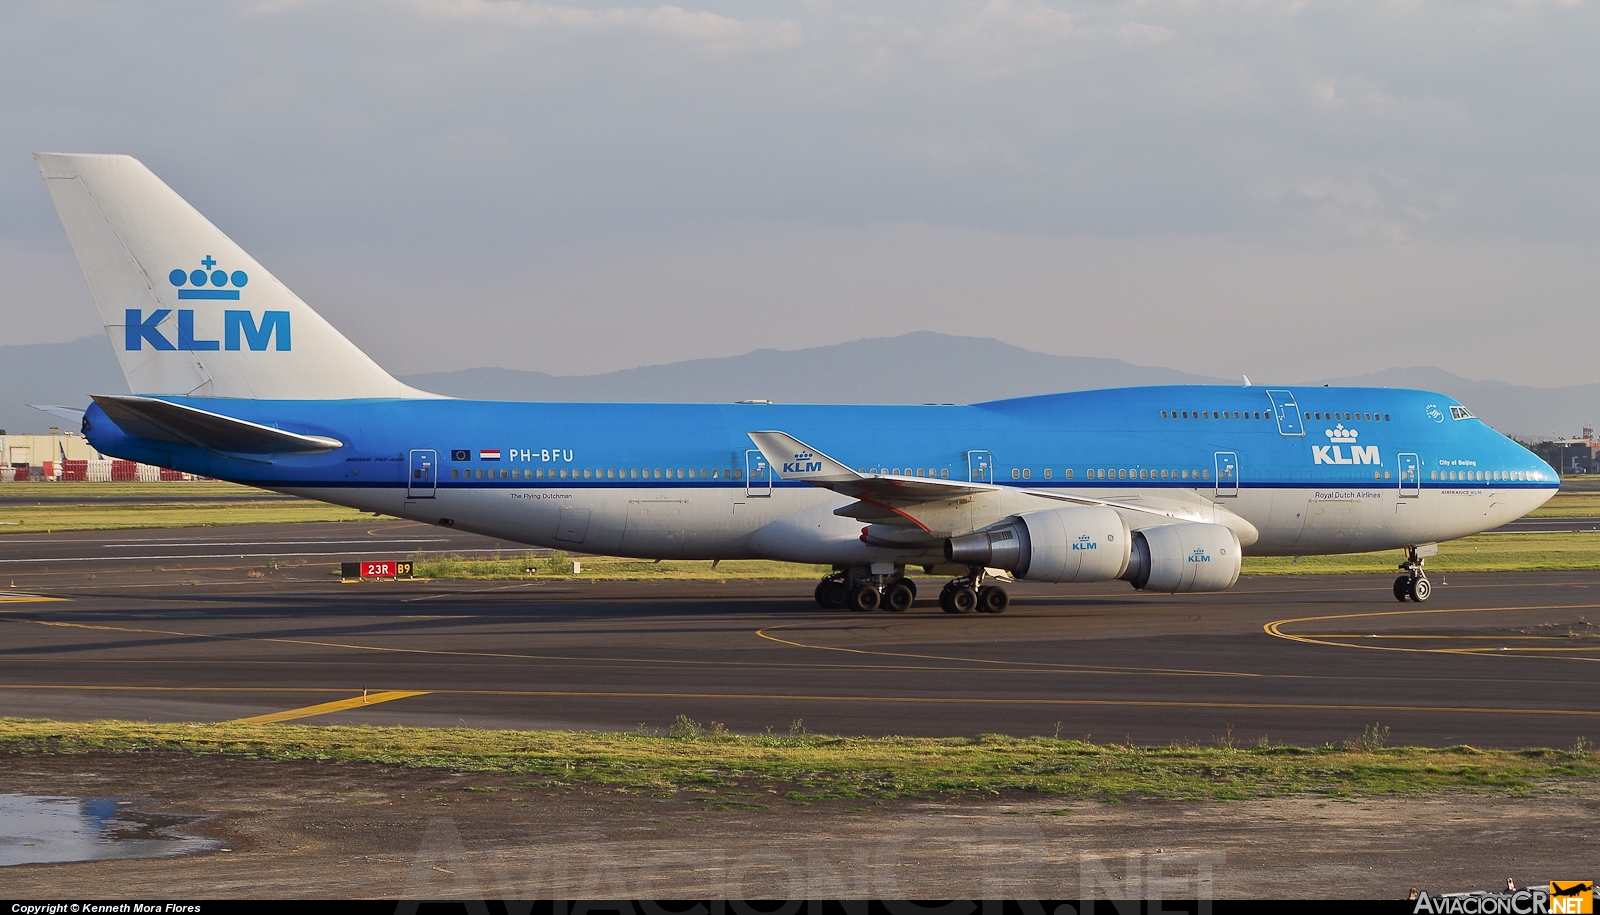 PH-BFU - Boeing 747-406M - KLM - Royal Dutch Airlines